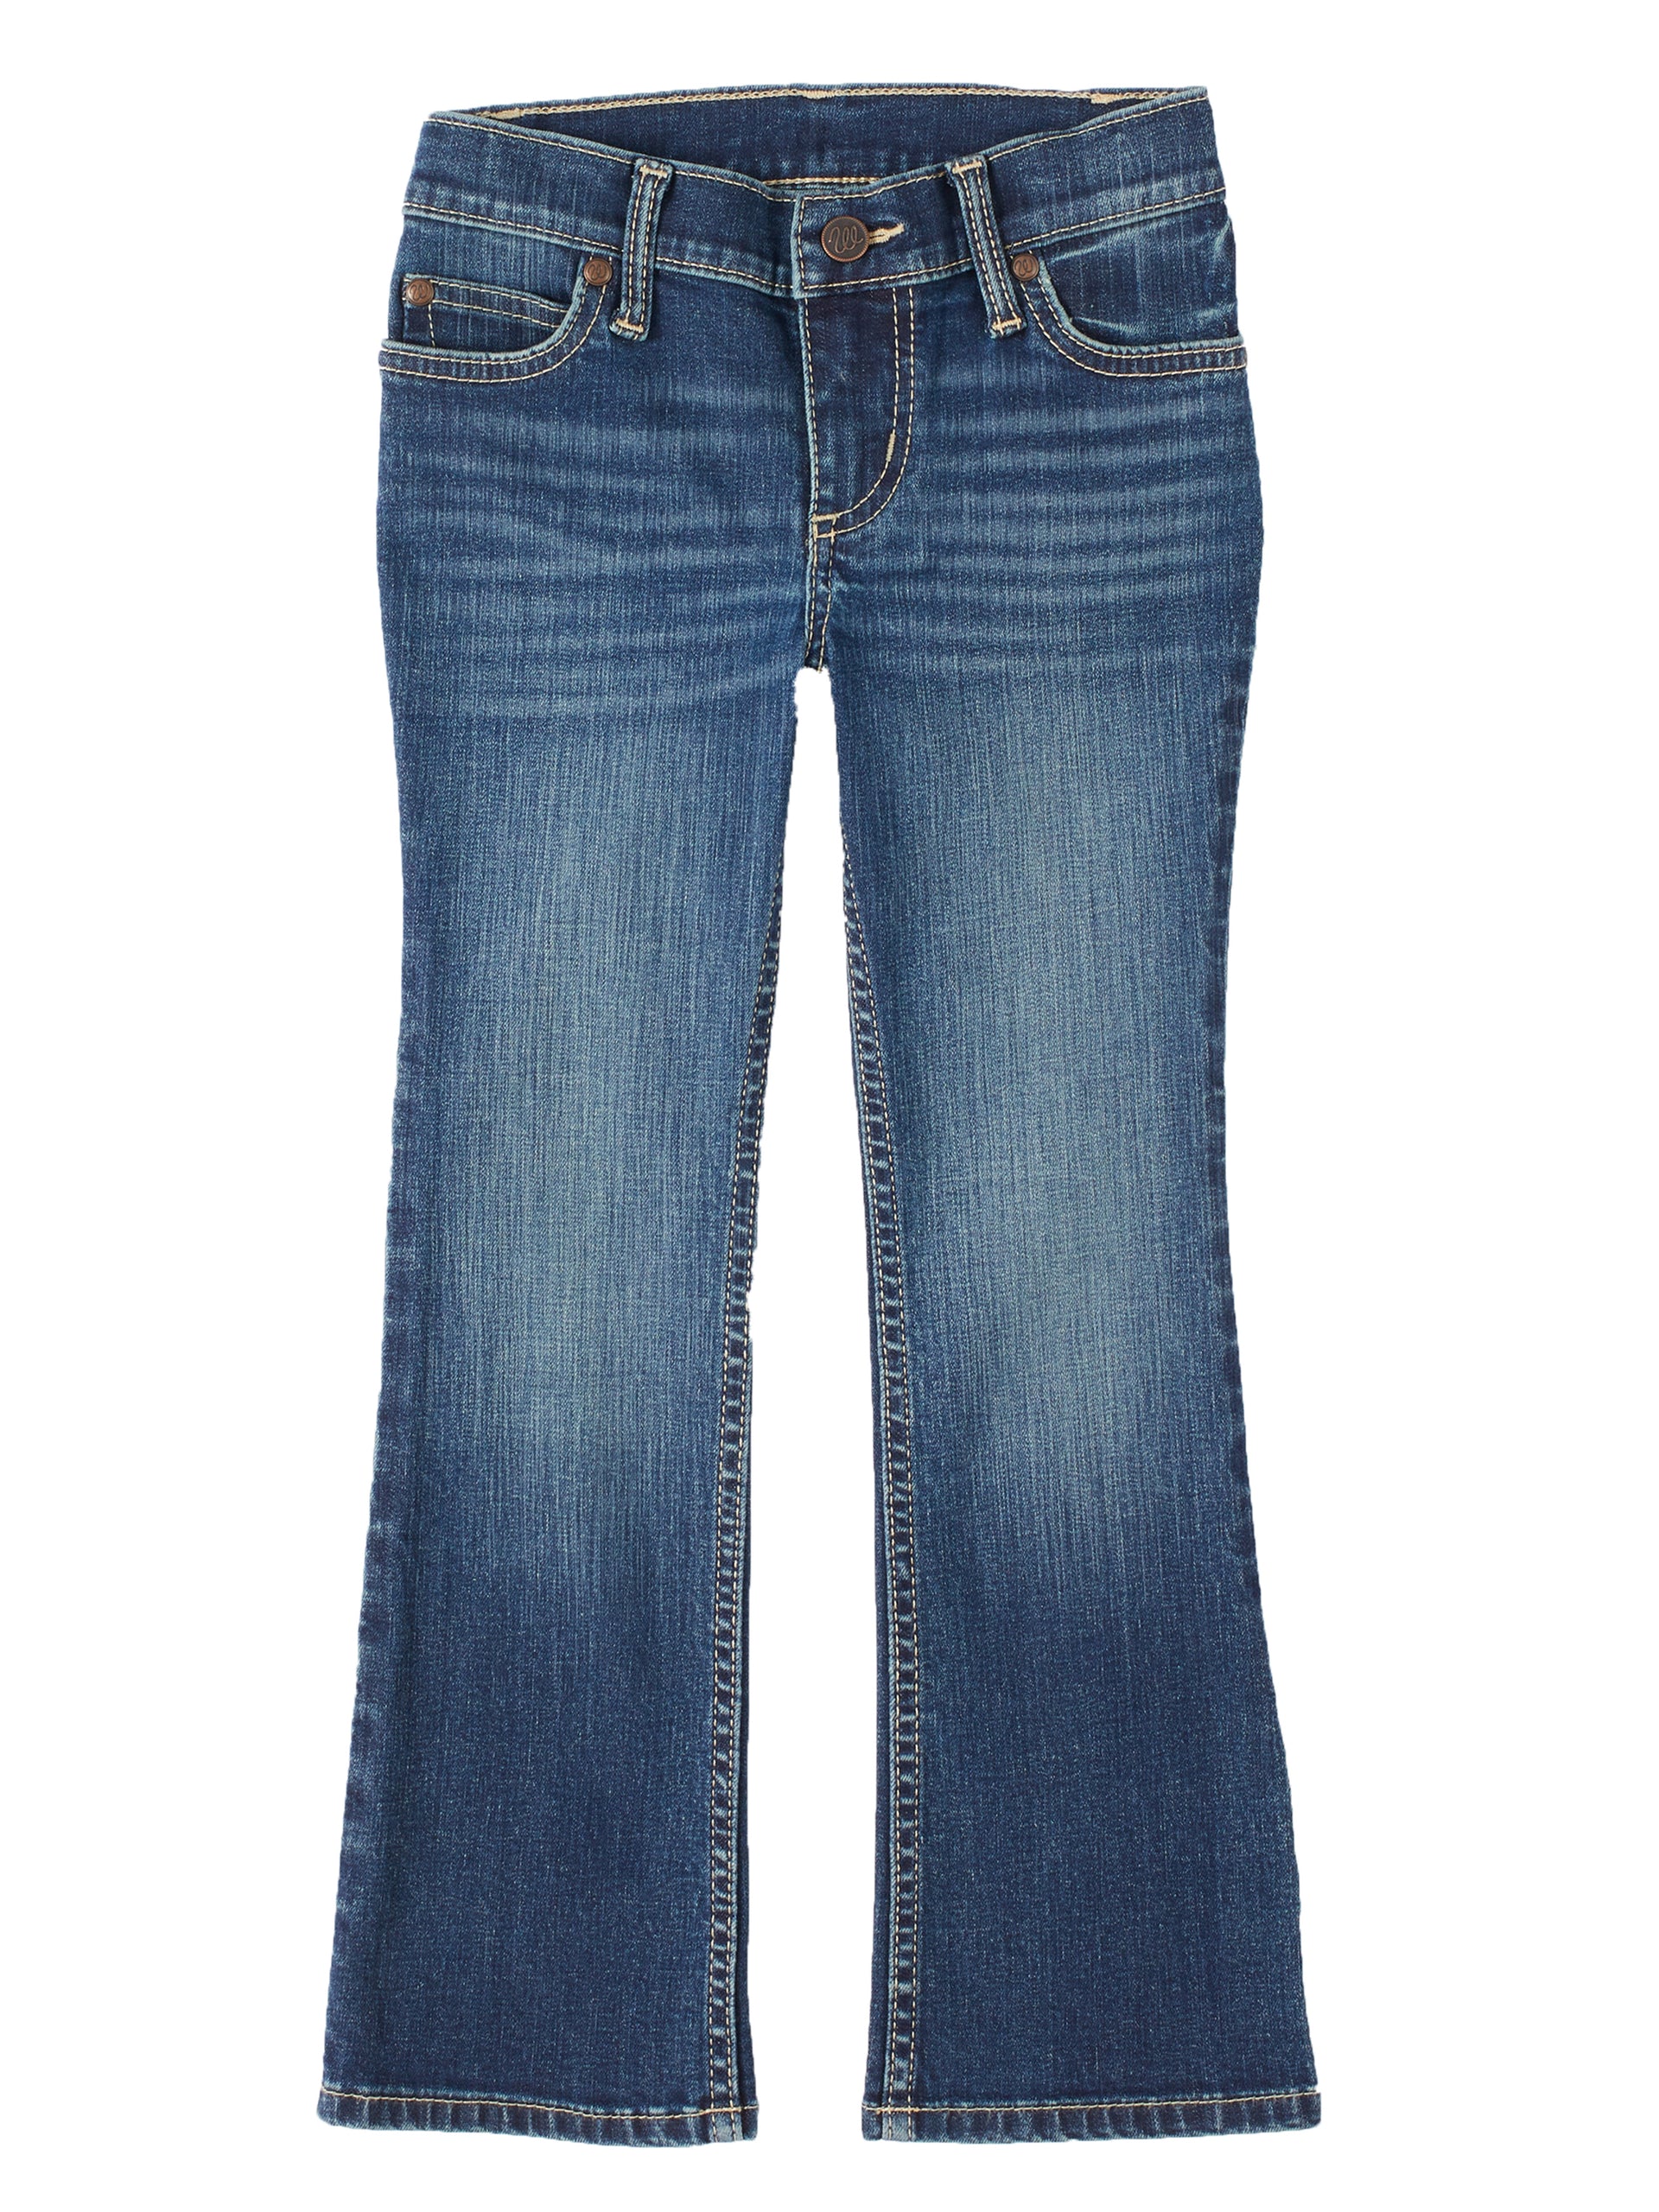 Wrangler Women's Cowboy Cut Jeans - Natural-Rise - Stonewash